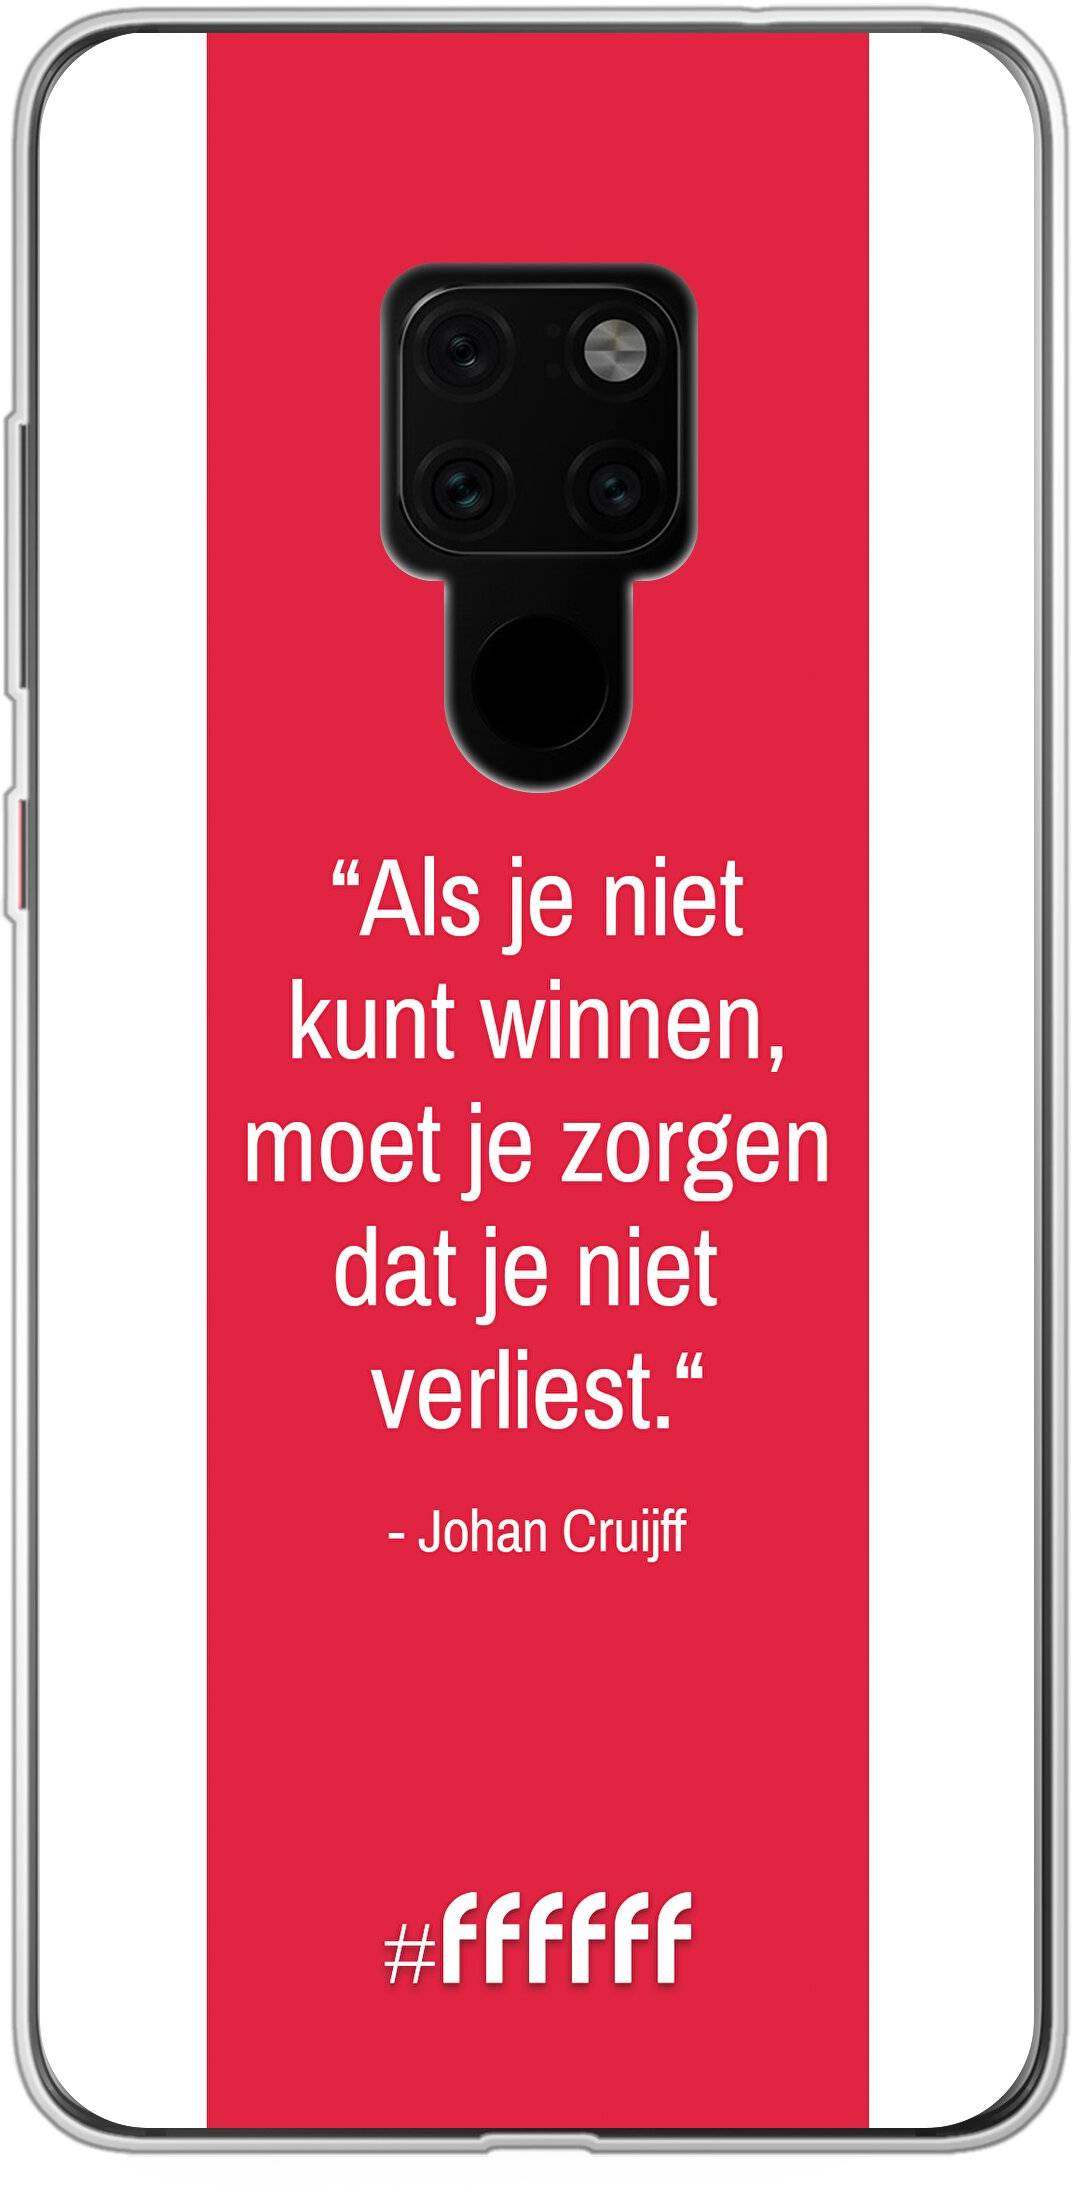 AFC Ajax Quote Johan Cruijff Mate 20